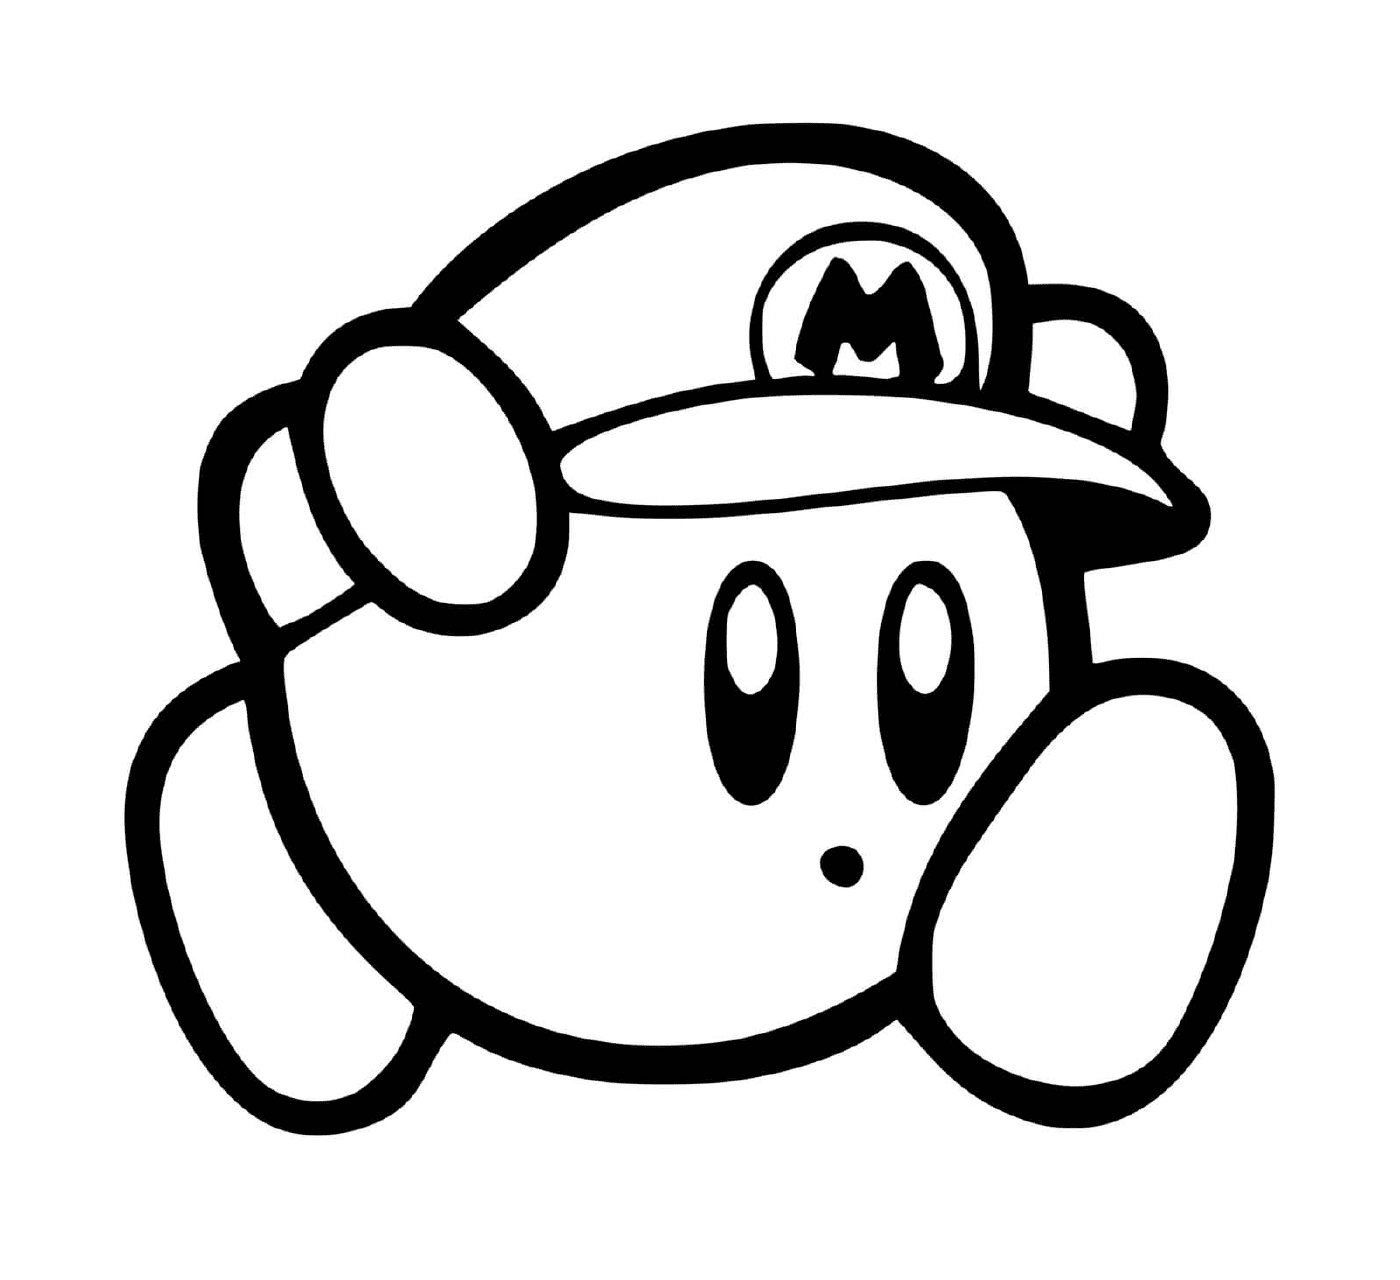  Kirby in the world of Mario Nintendo 